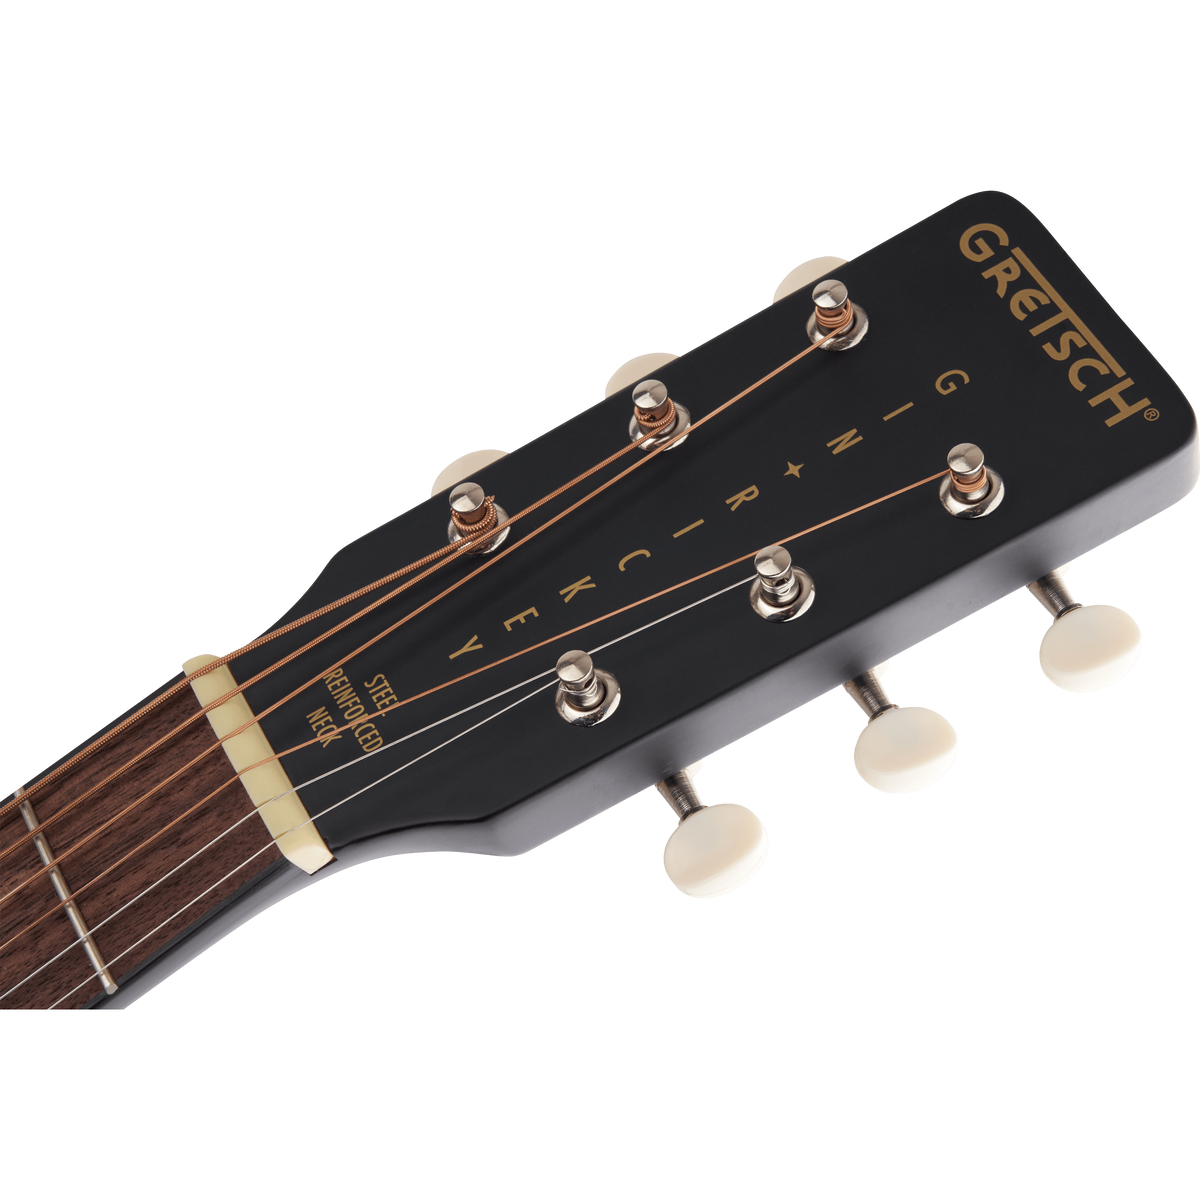 Gretsch G9520E Gin Rickey Acoustic Electric Guitar